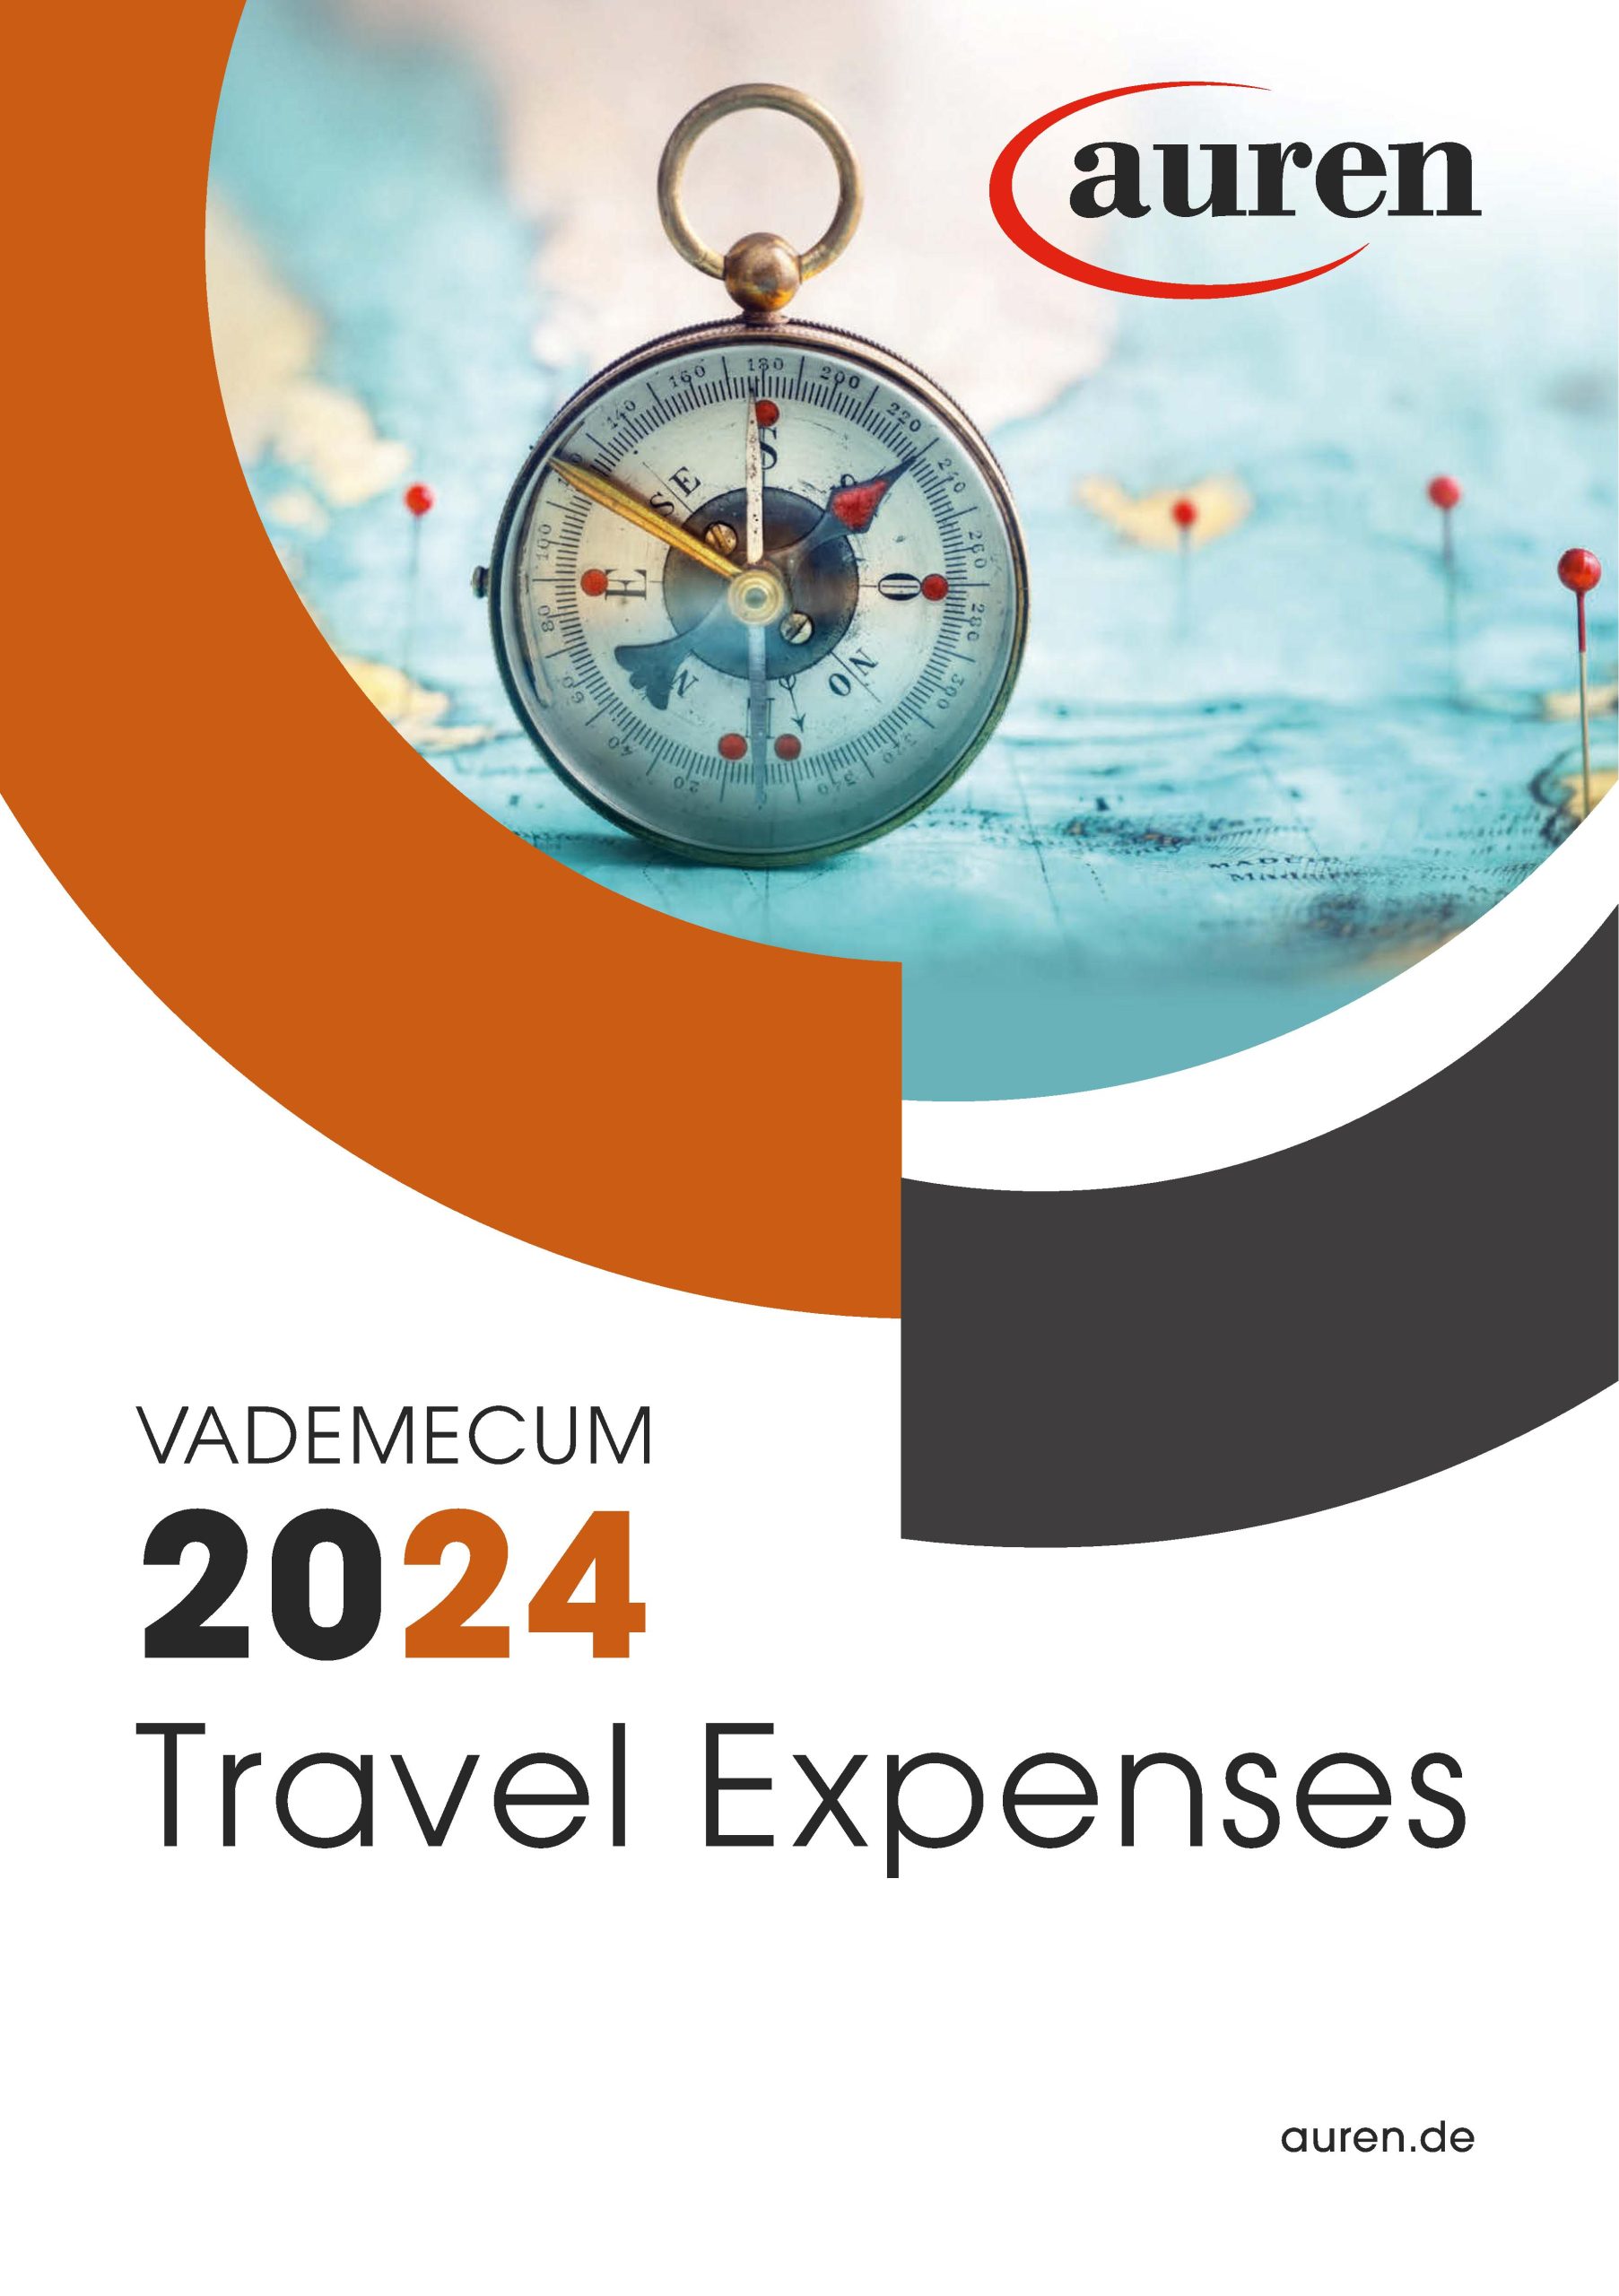 Vademecum 2024 Travel Expenses Auren Deutschland